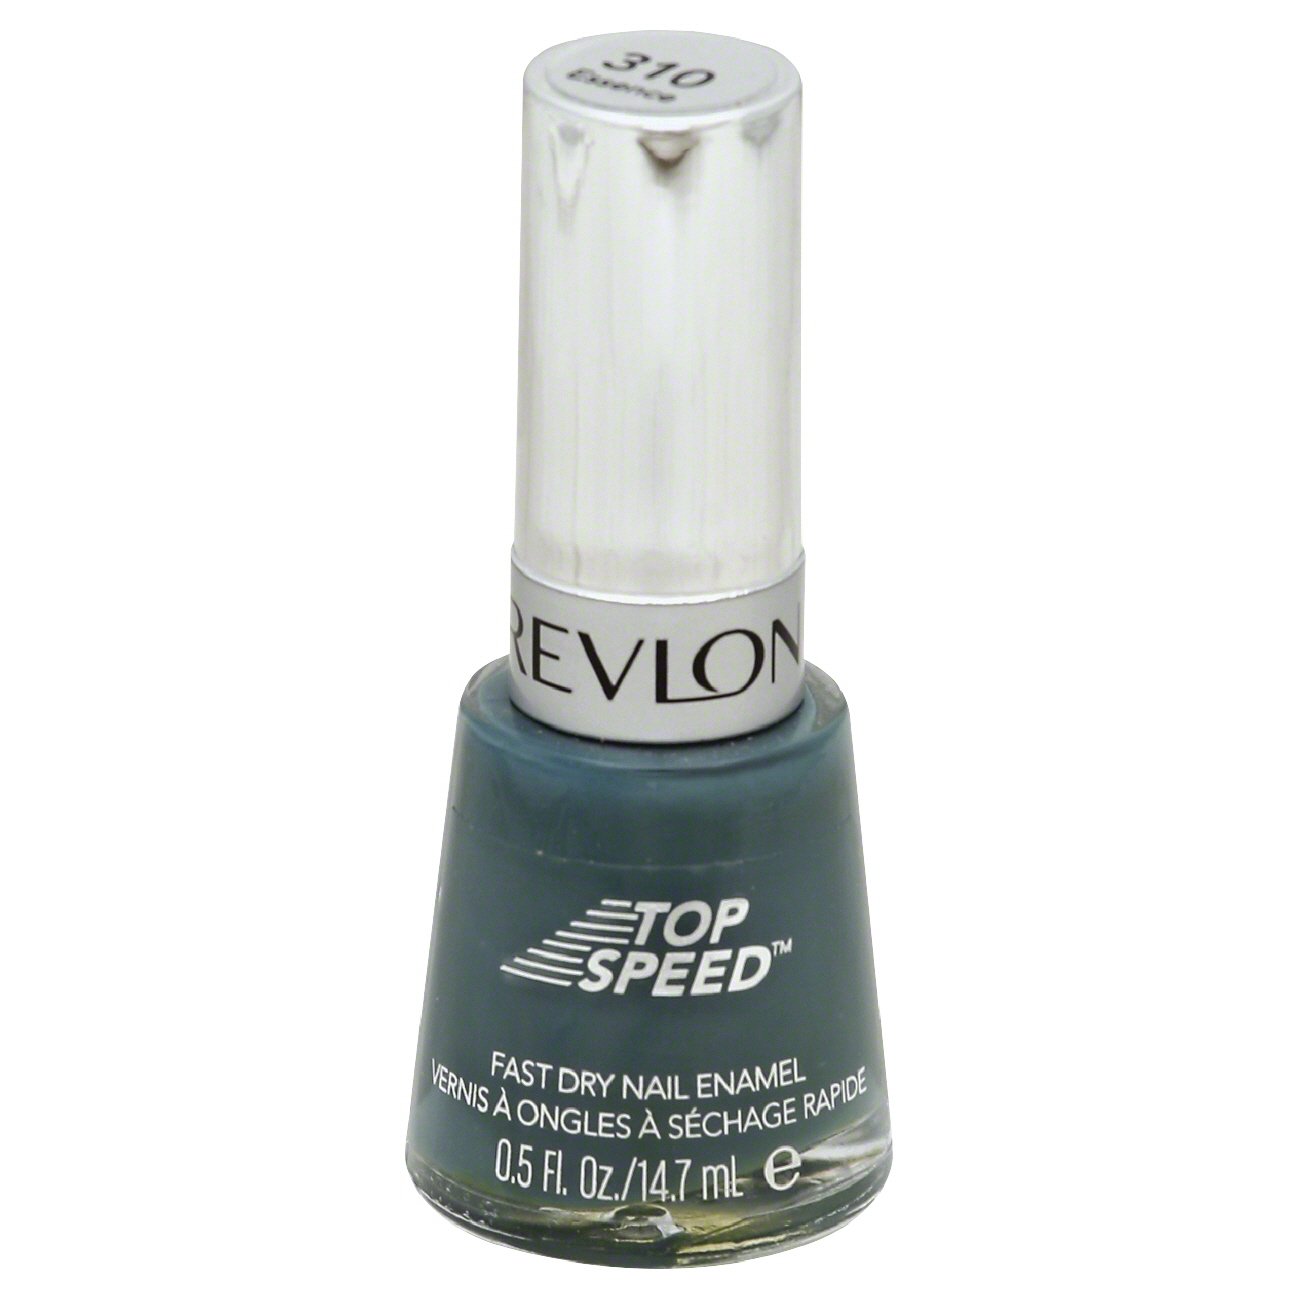 Revlon Top Speed Fast Dry Nail Enamel Essence Shop Nail Polish At H E B